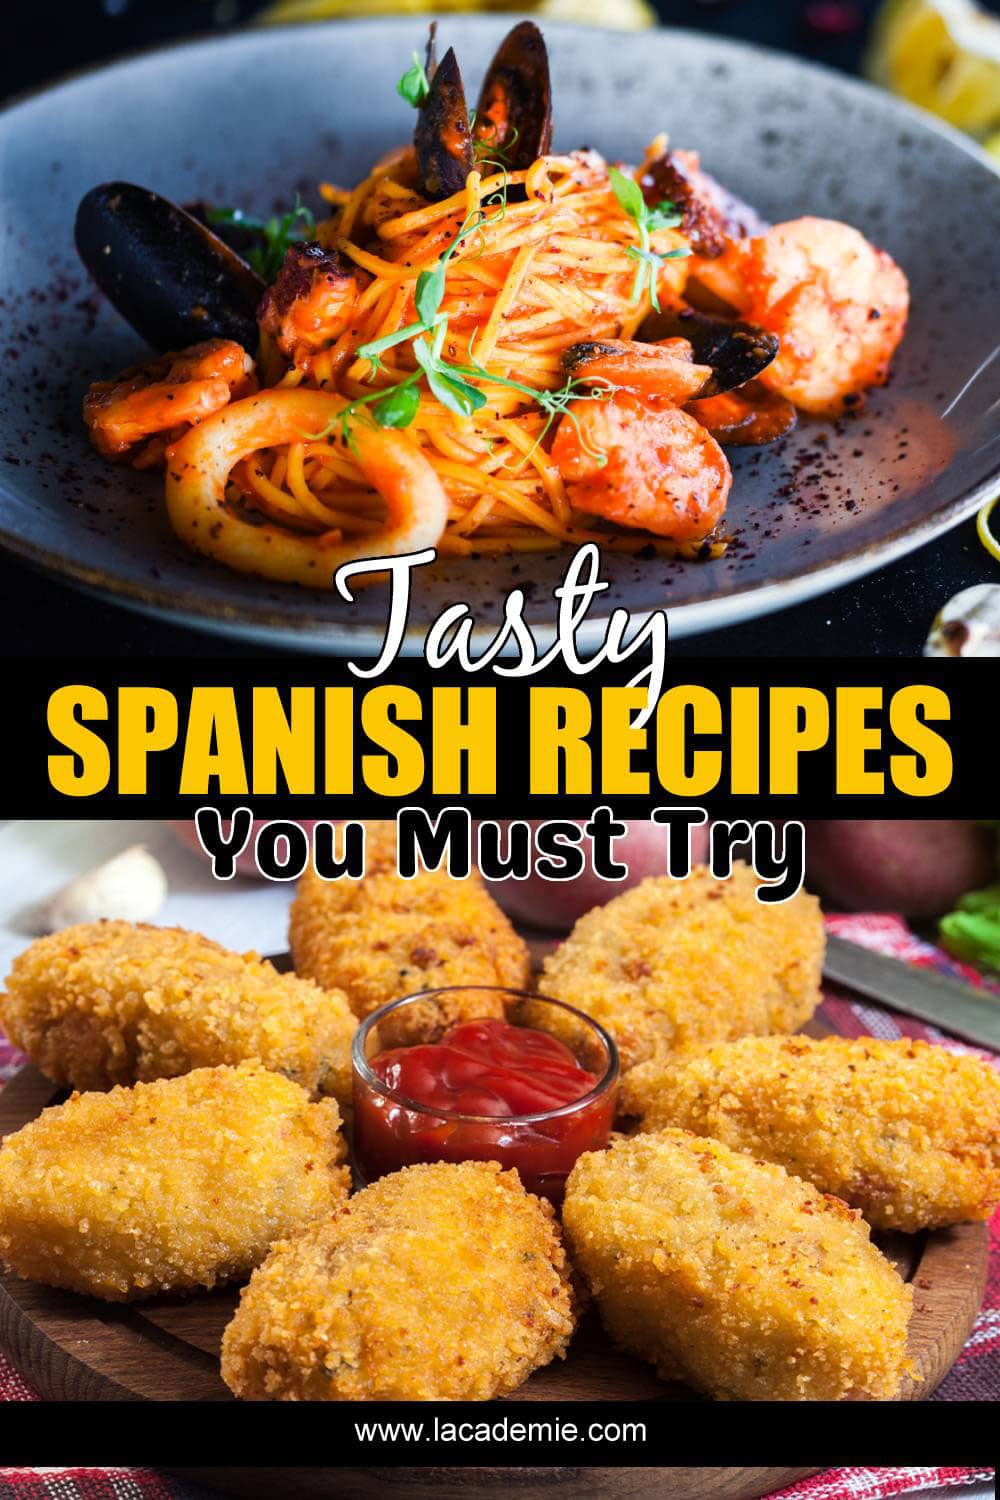 Spanish Recipes Img 